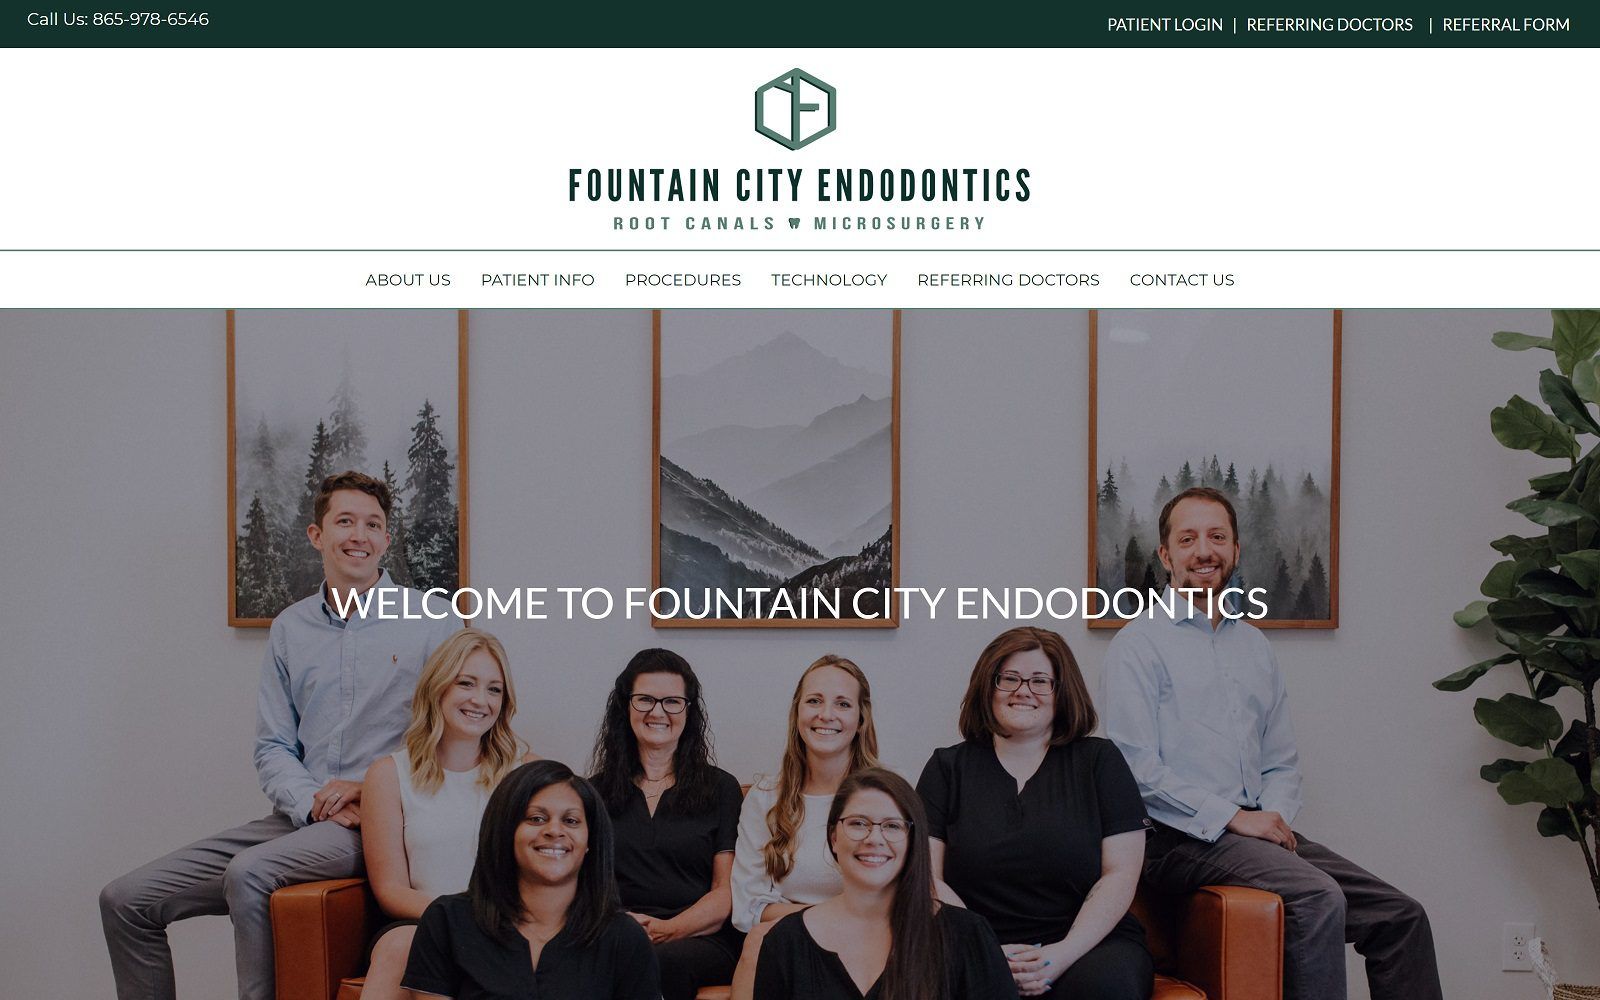 The Screenshot of Fountain City Endodontics Website